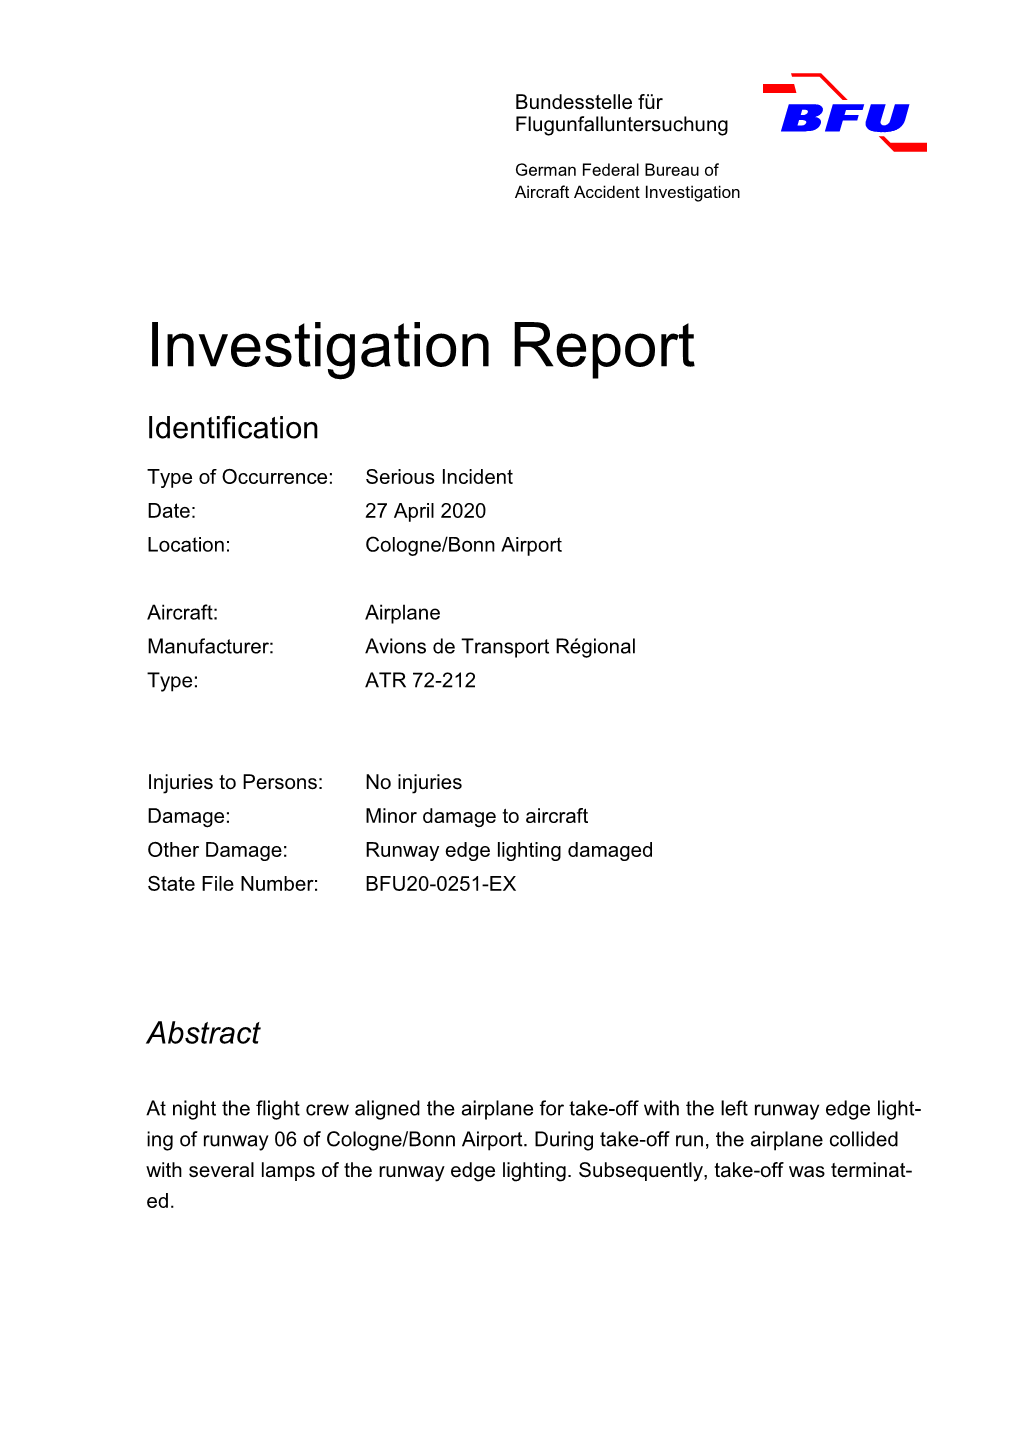 Investigation Report of a Serios Incident at Köln-Bonn Airport